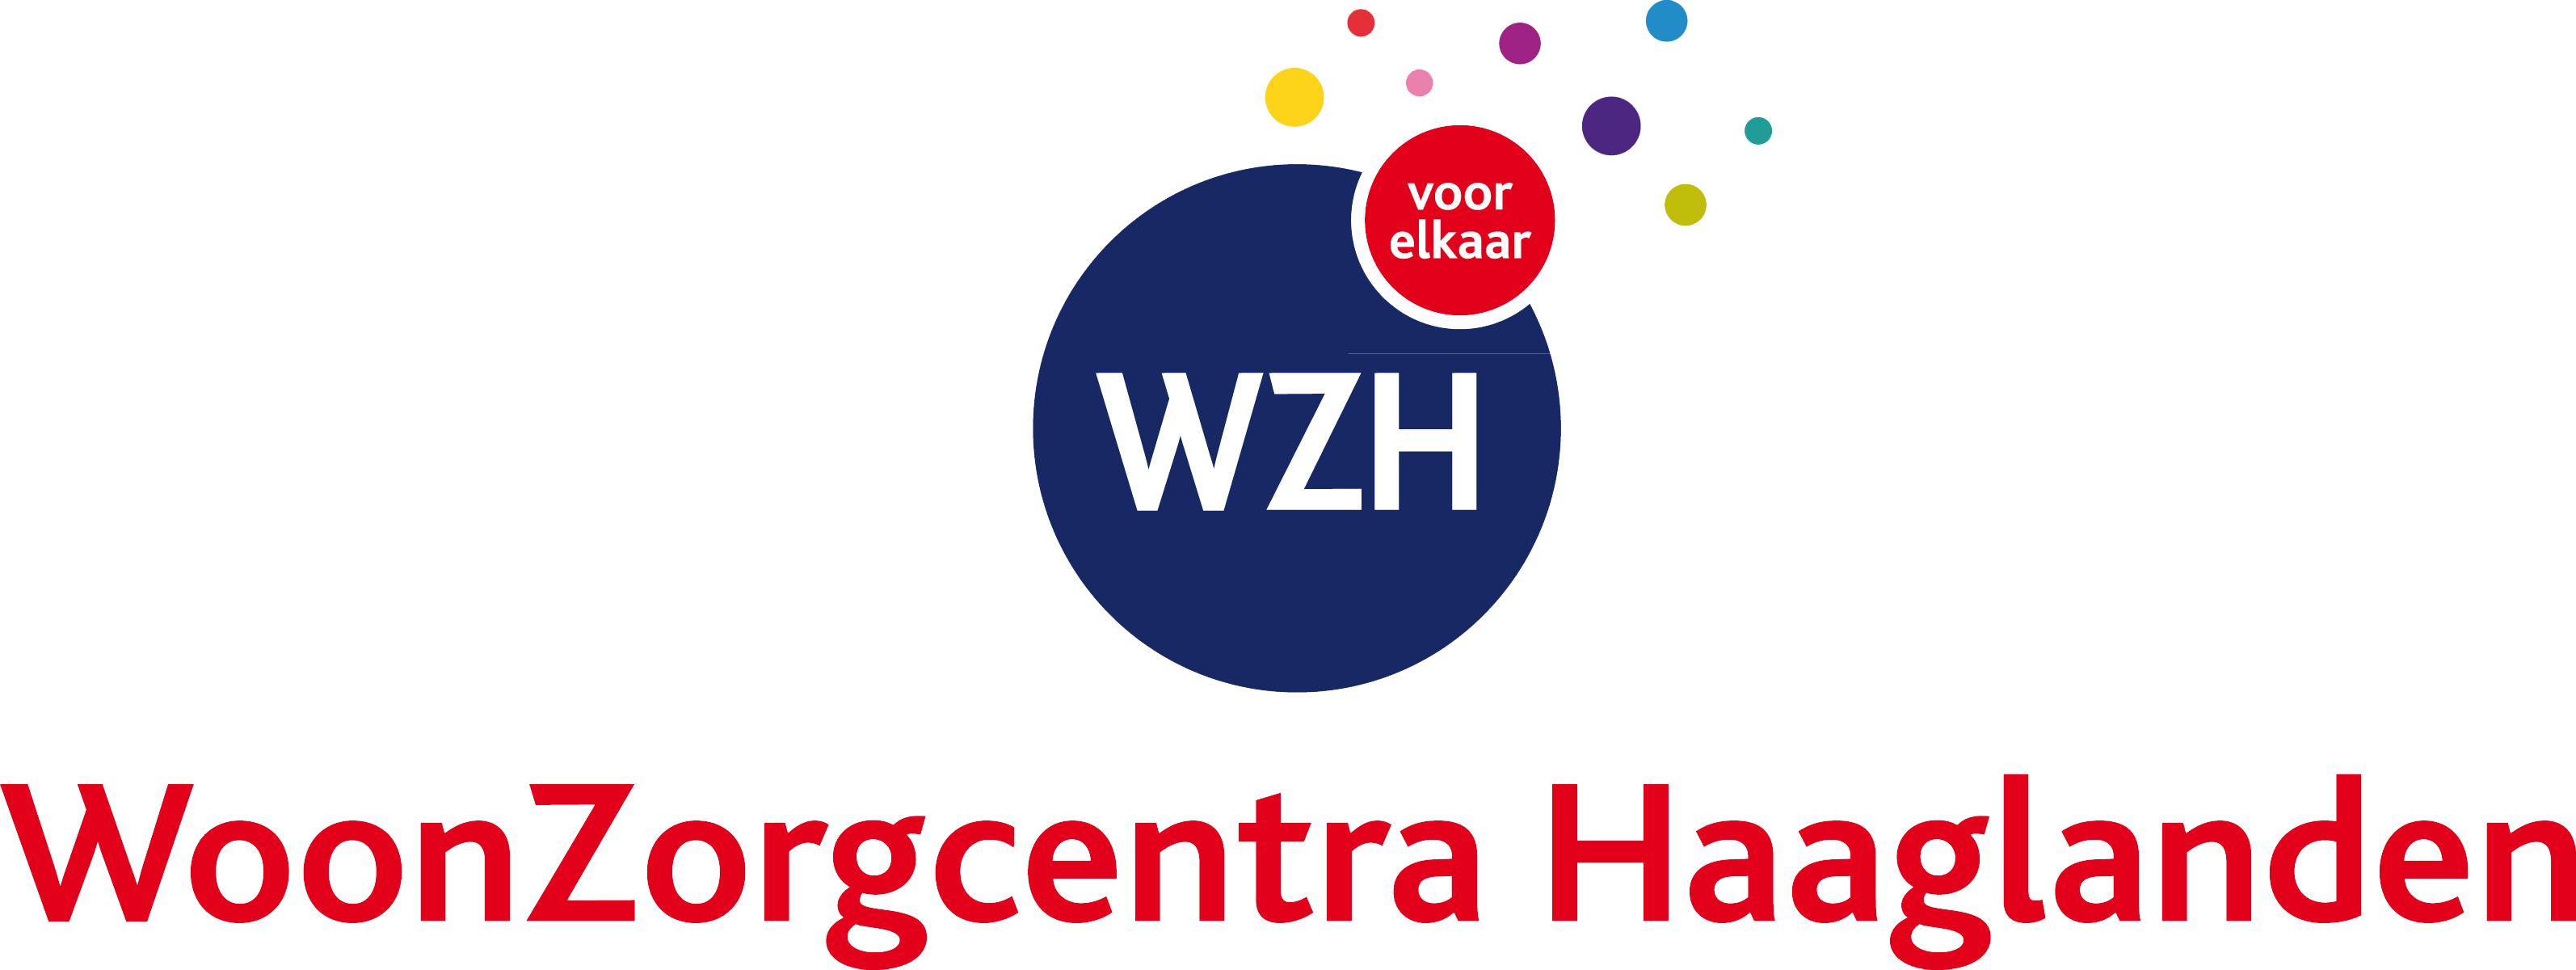 WZH Logo WoonZorgcentra FC